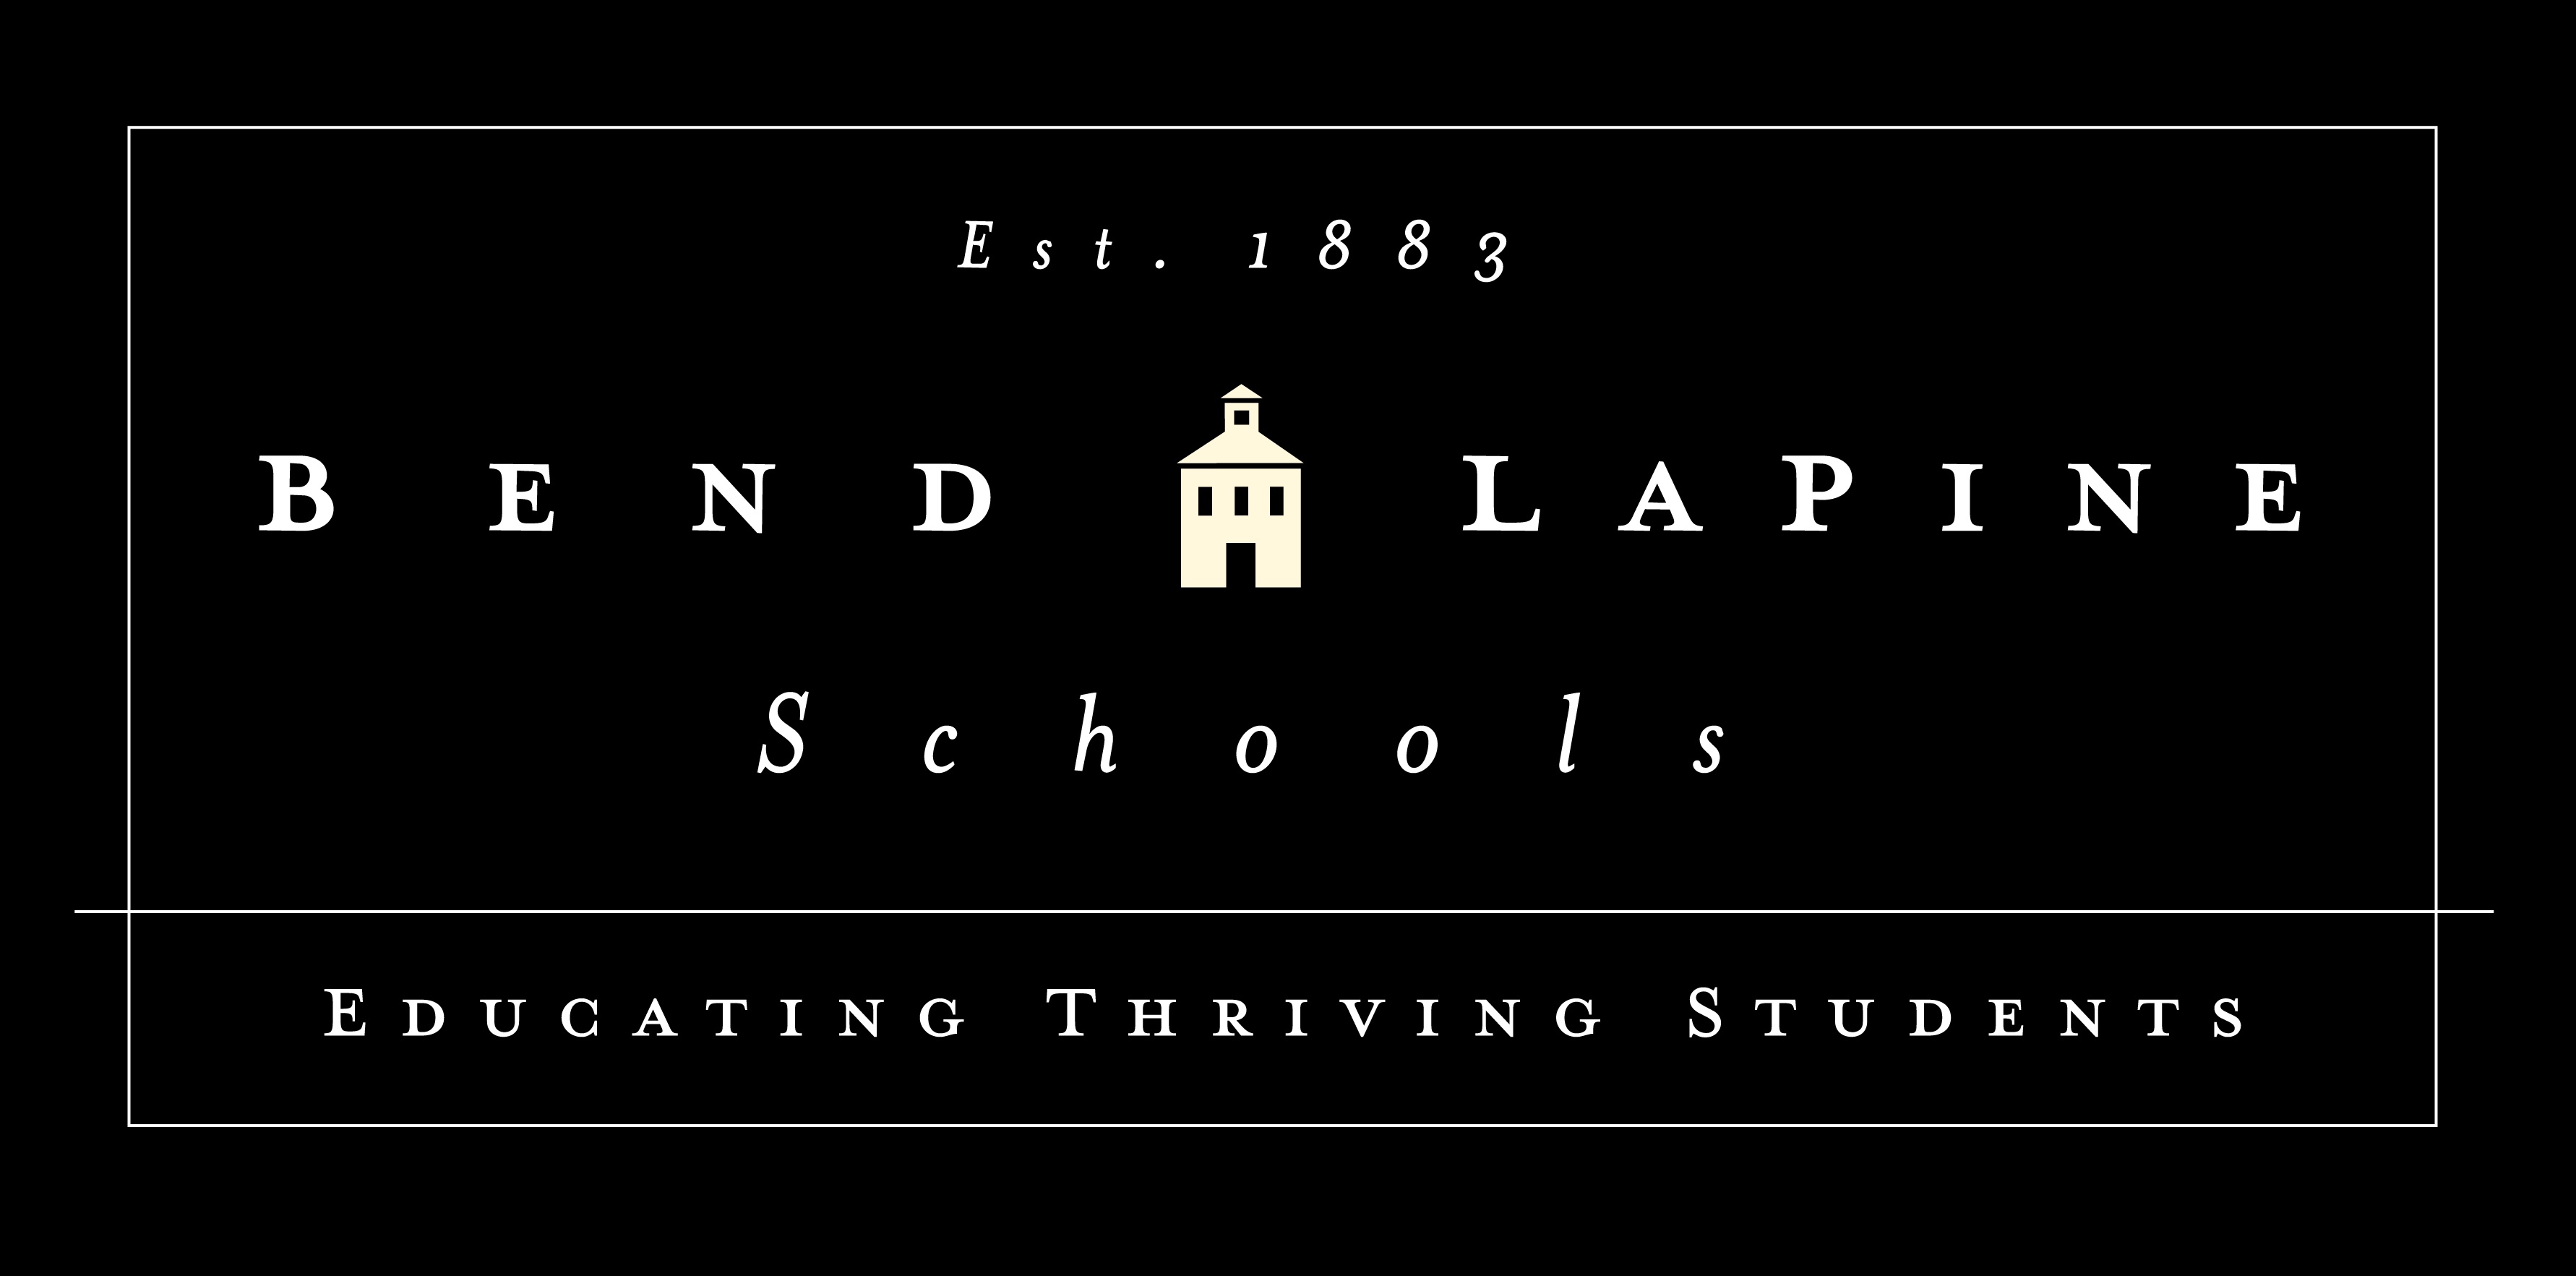 Bend-La Pine Schools's Logo